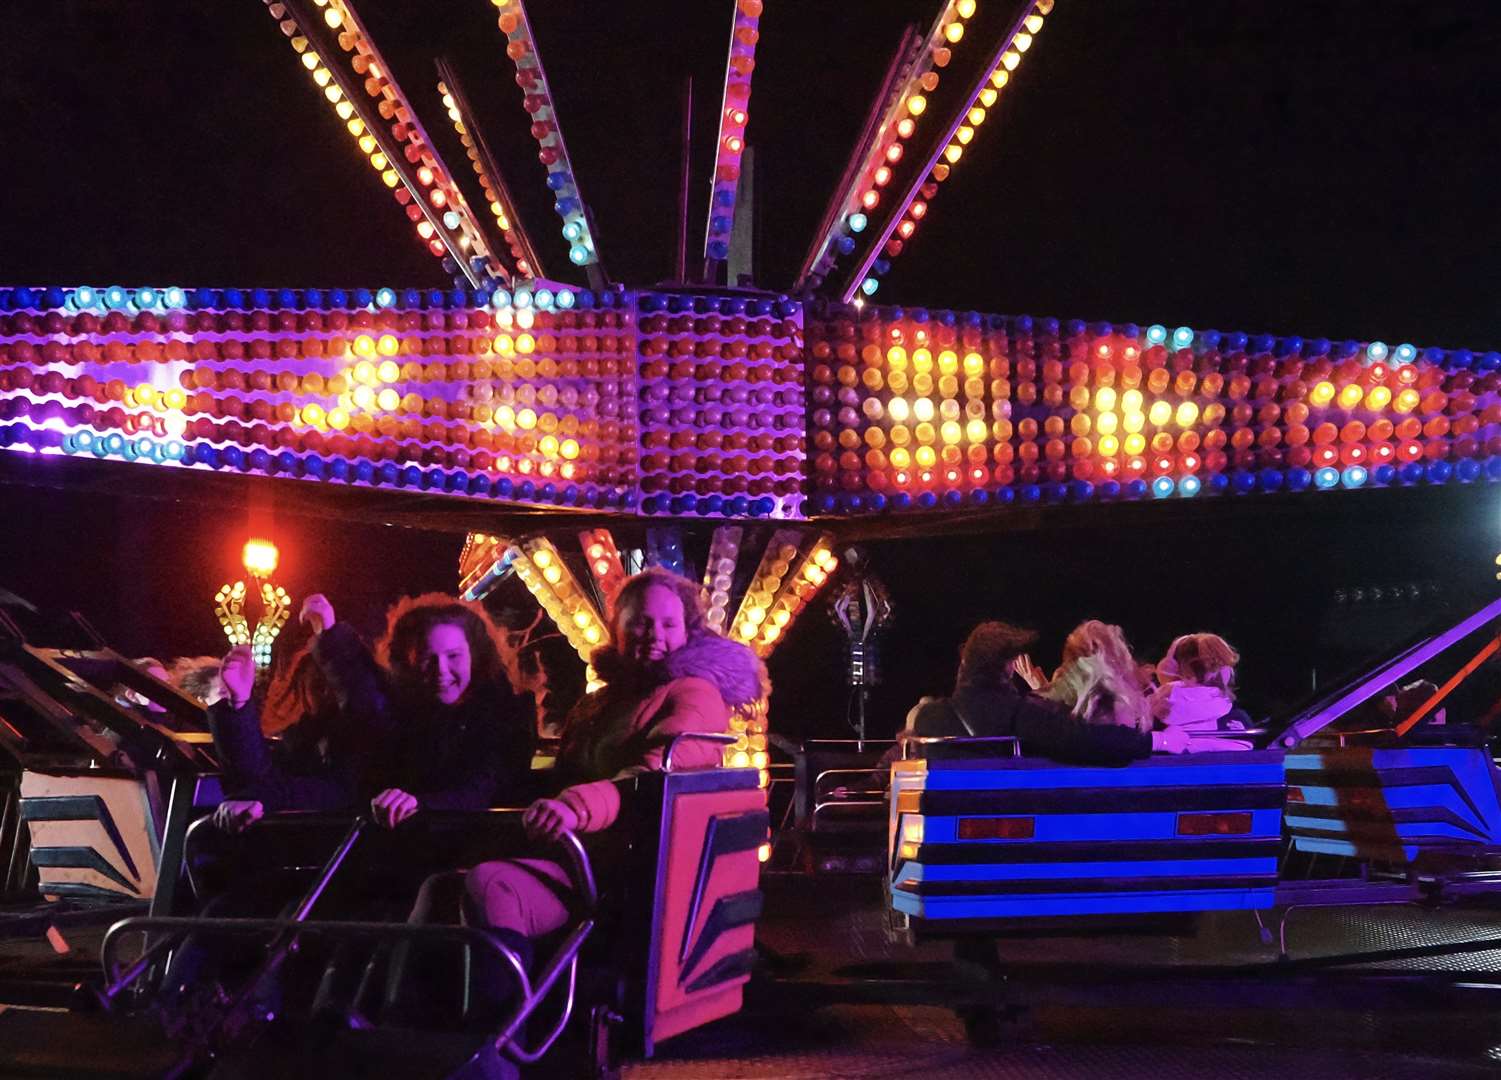 Herchers' fun fair provided extra entertainment on the night. Photo: Peter Wild